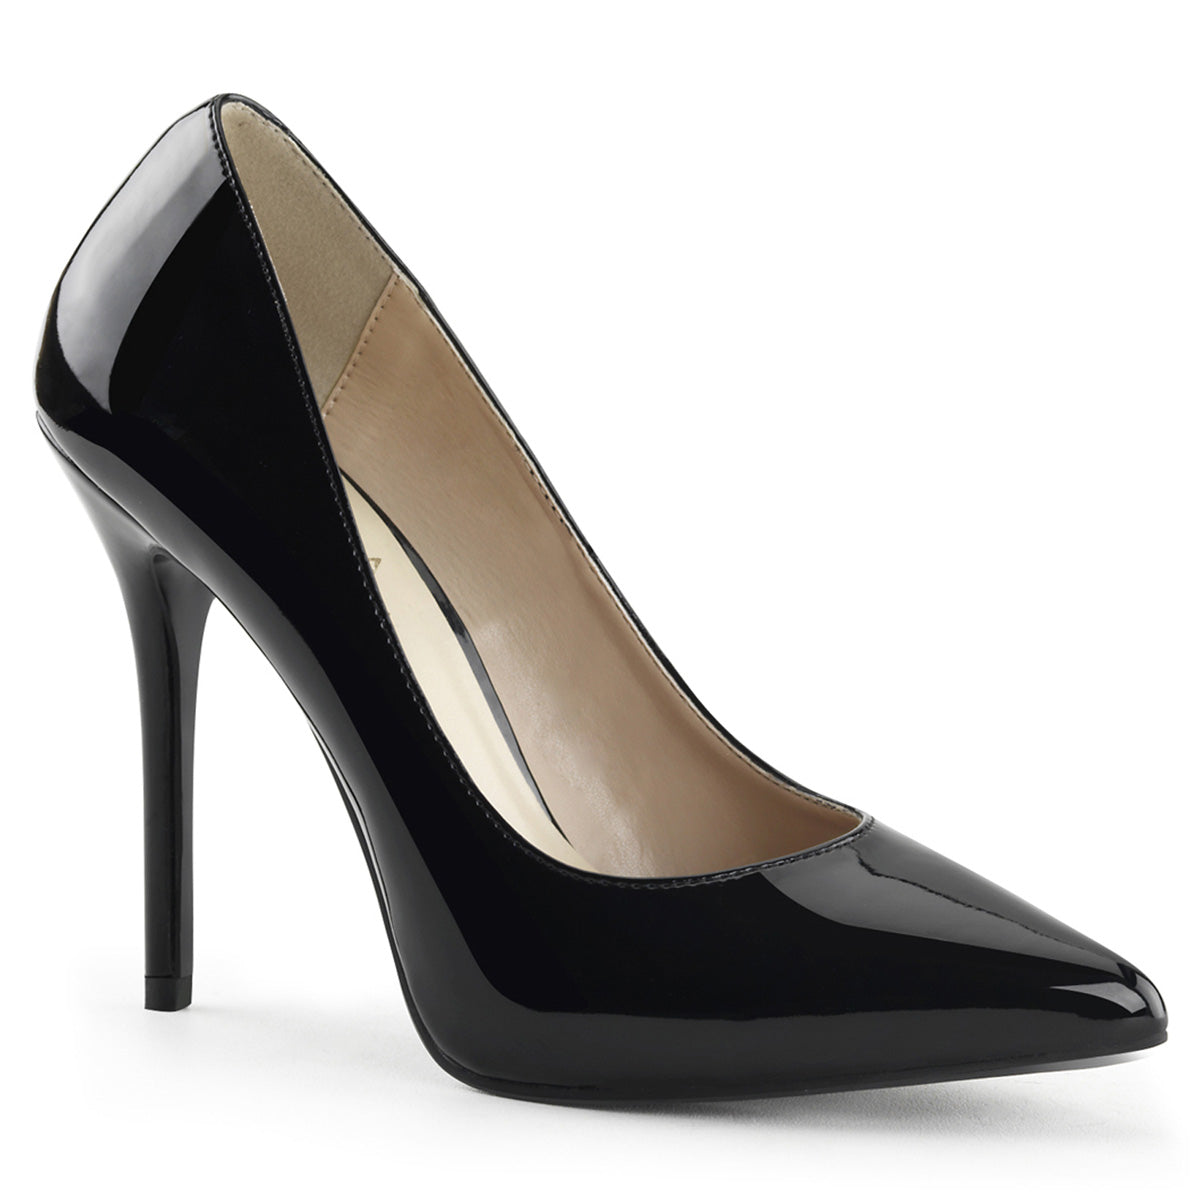 Large Size Women's Heels & Shoes, Buy Online from Australia